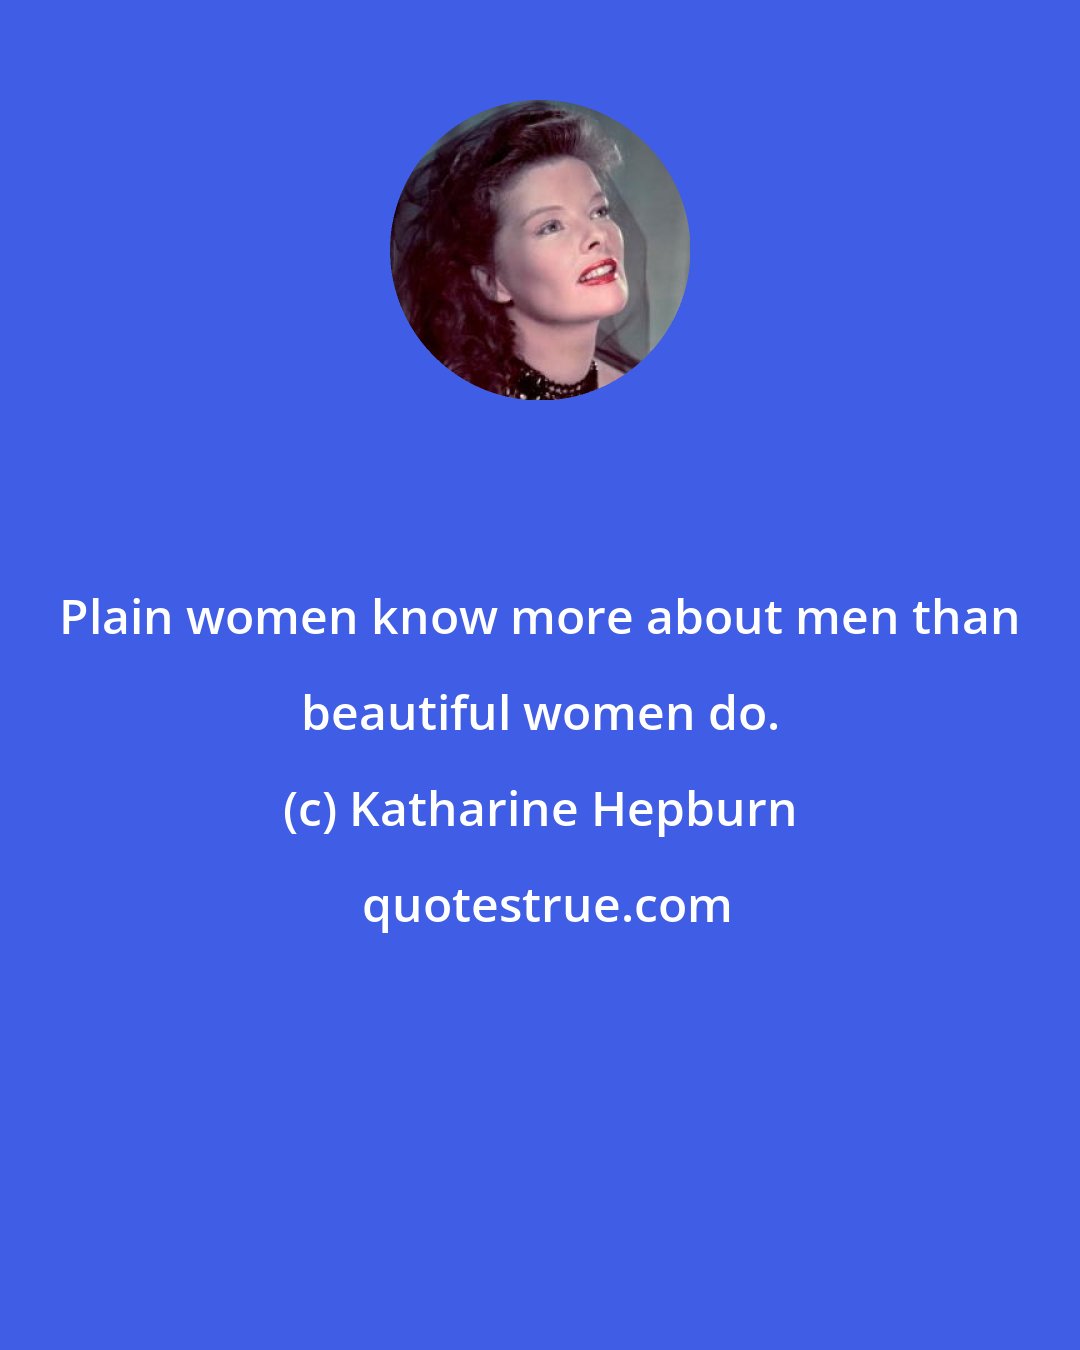 Katharine Hepburn: Plain women know more about men than beautiful women do.